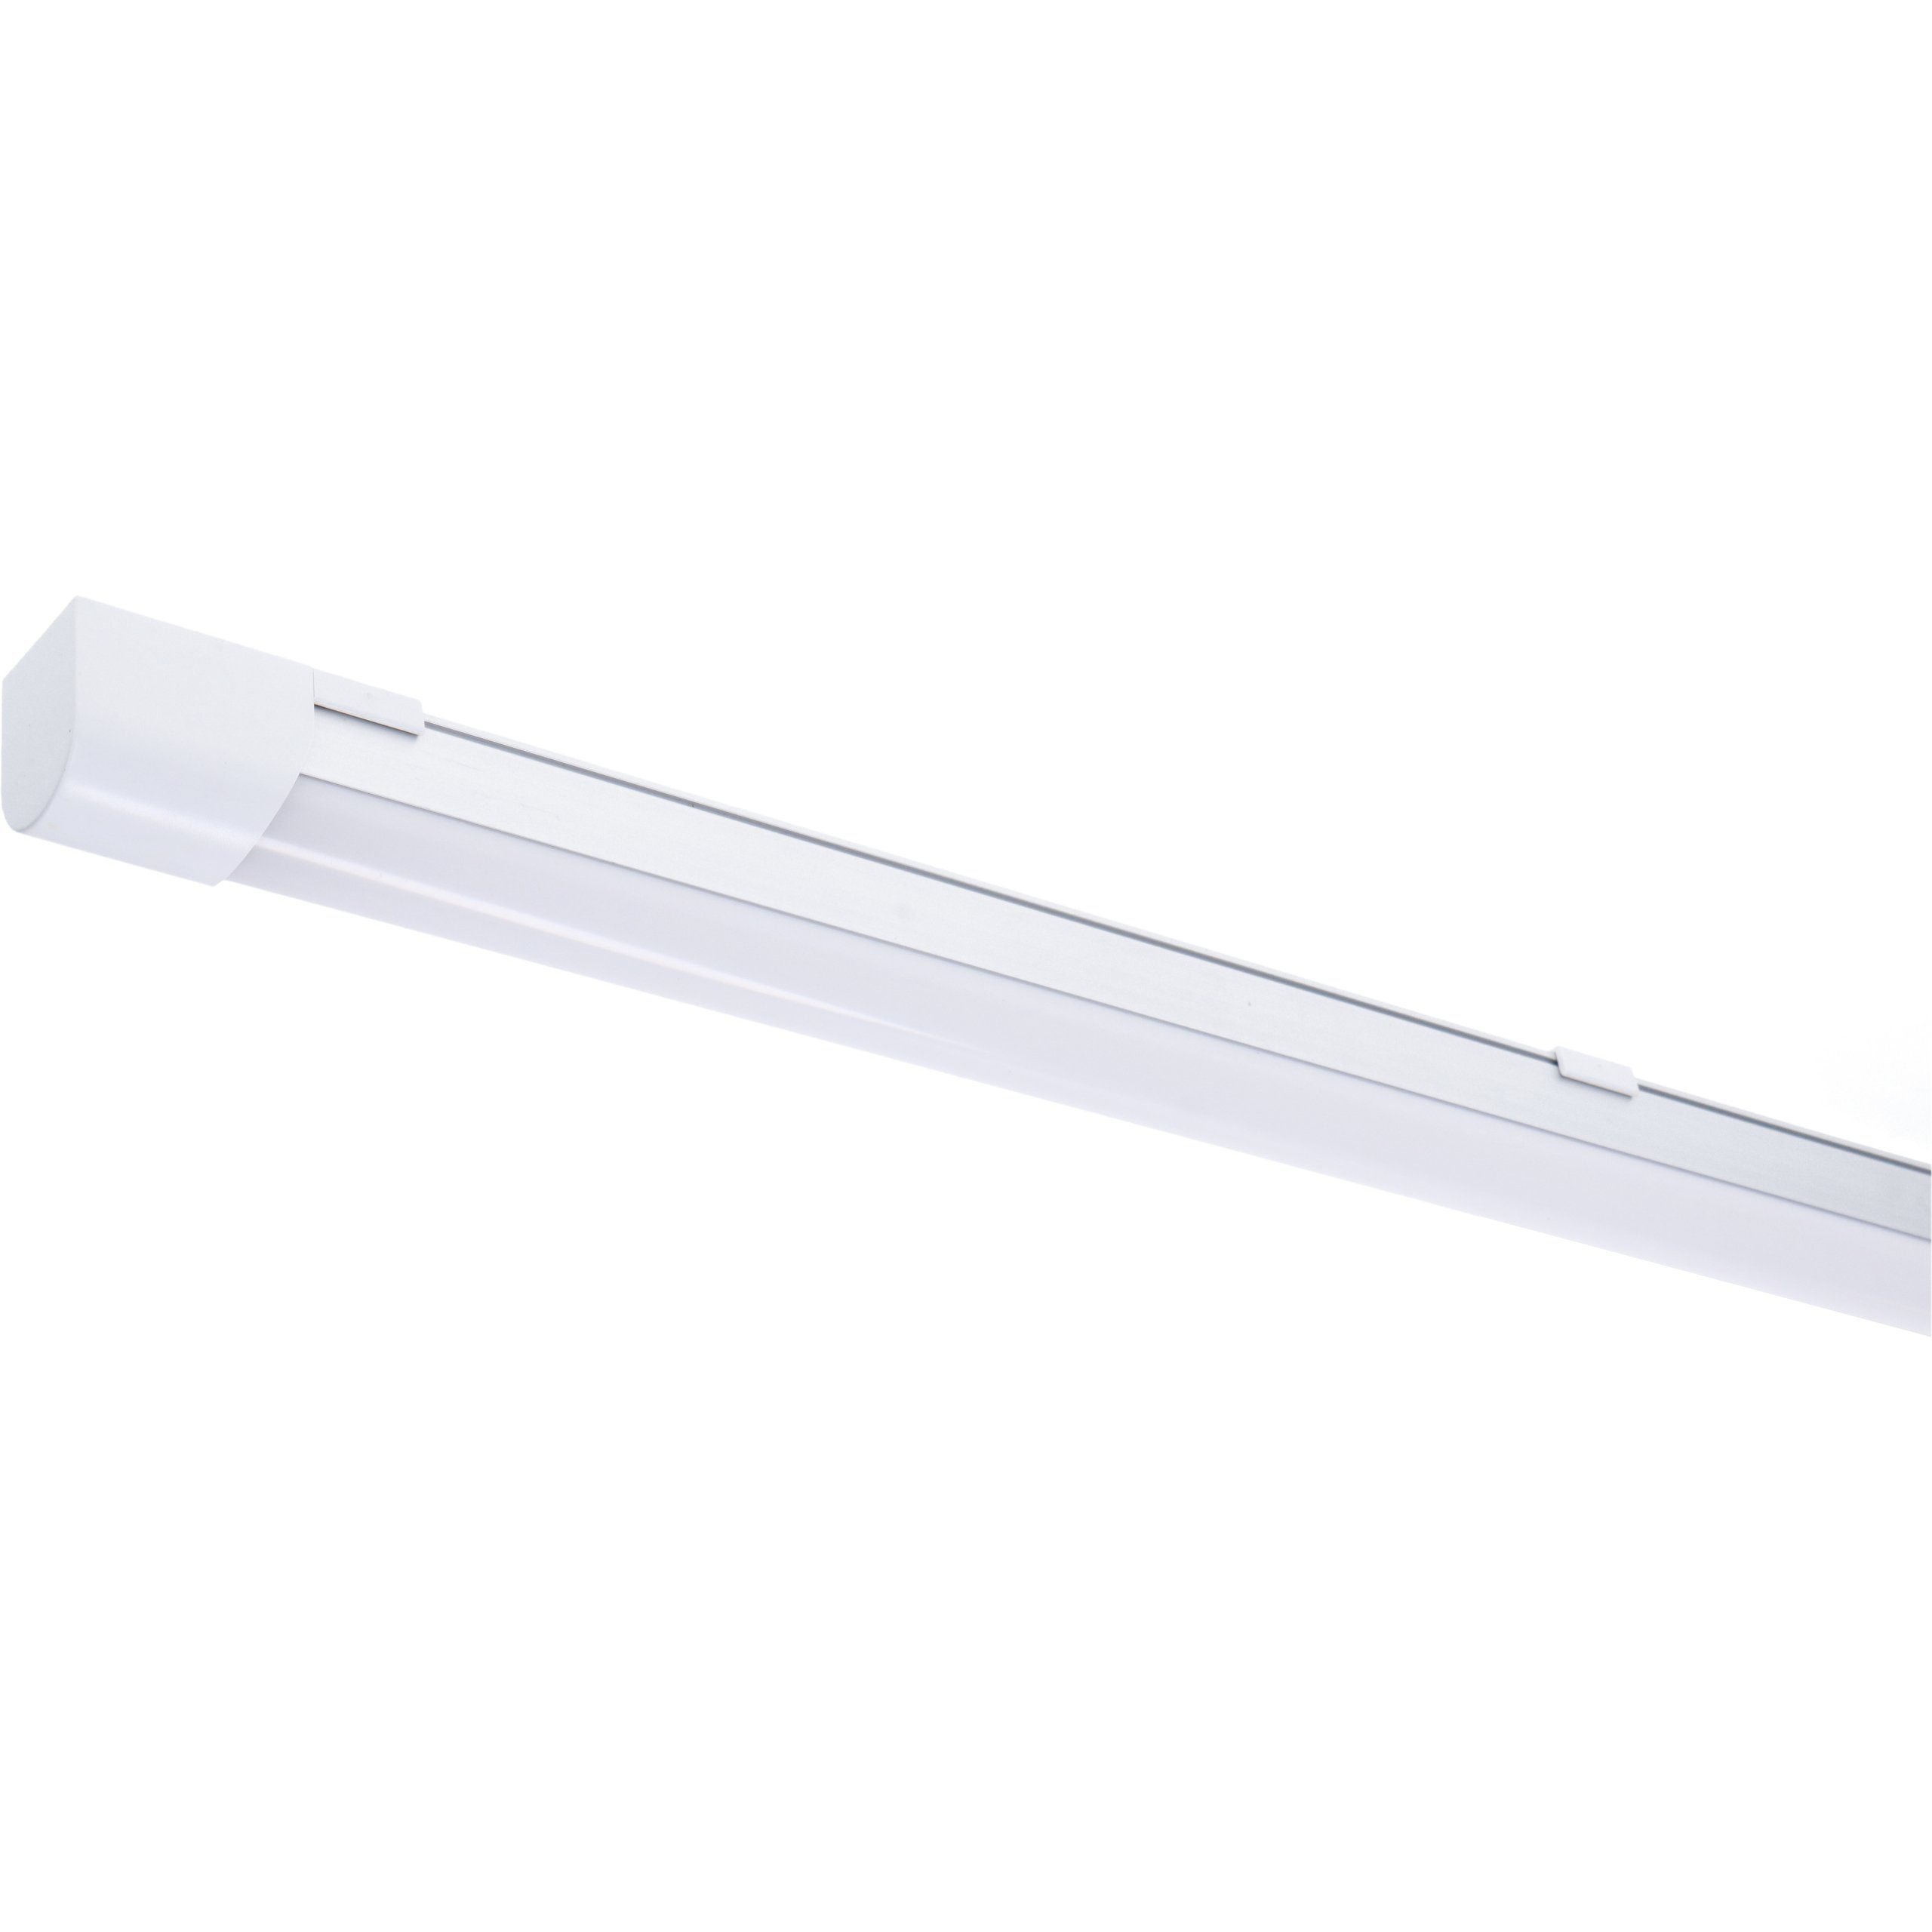 LED\'s light LED Unterbauleuchte 2410212 LED-Unterbauleuchte mit 150 cm LED-Röhre,  LED, 24 Watt neutralweiß G13